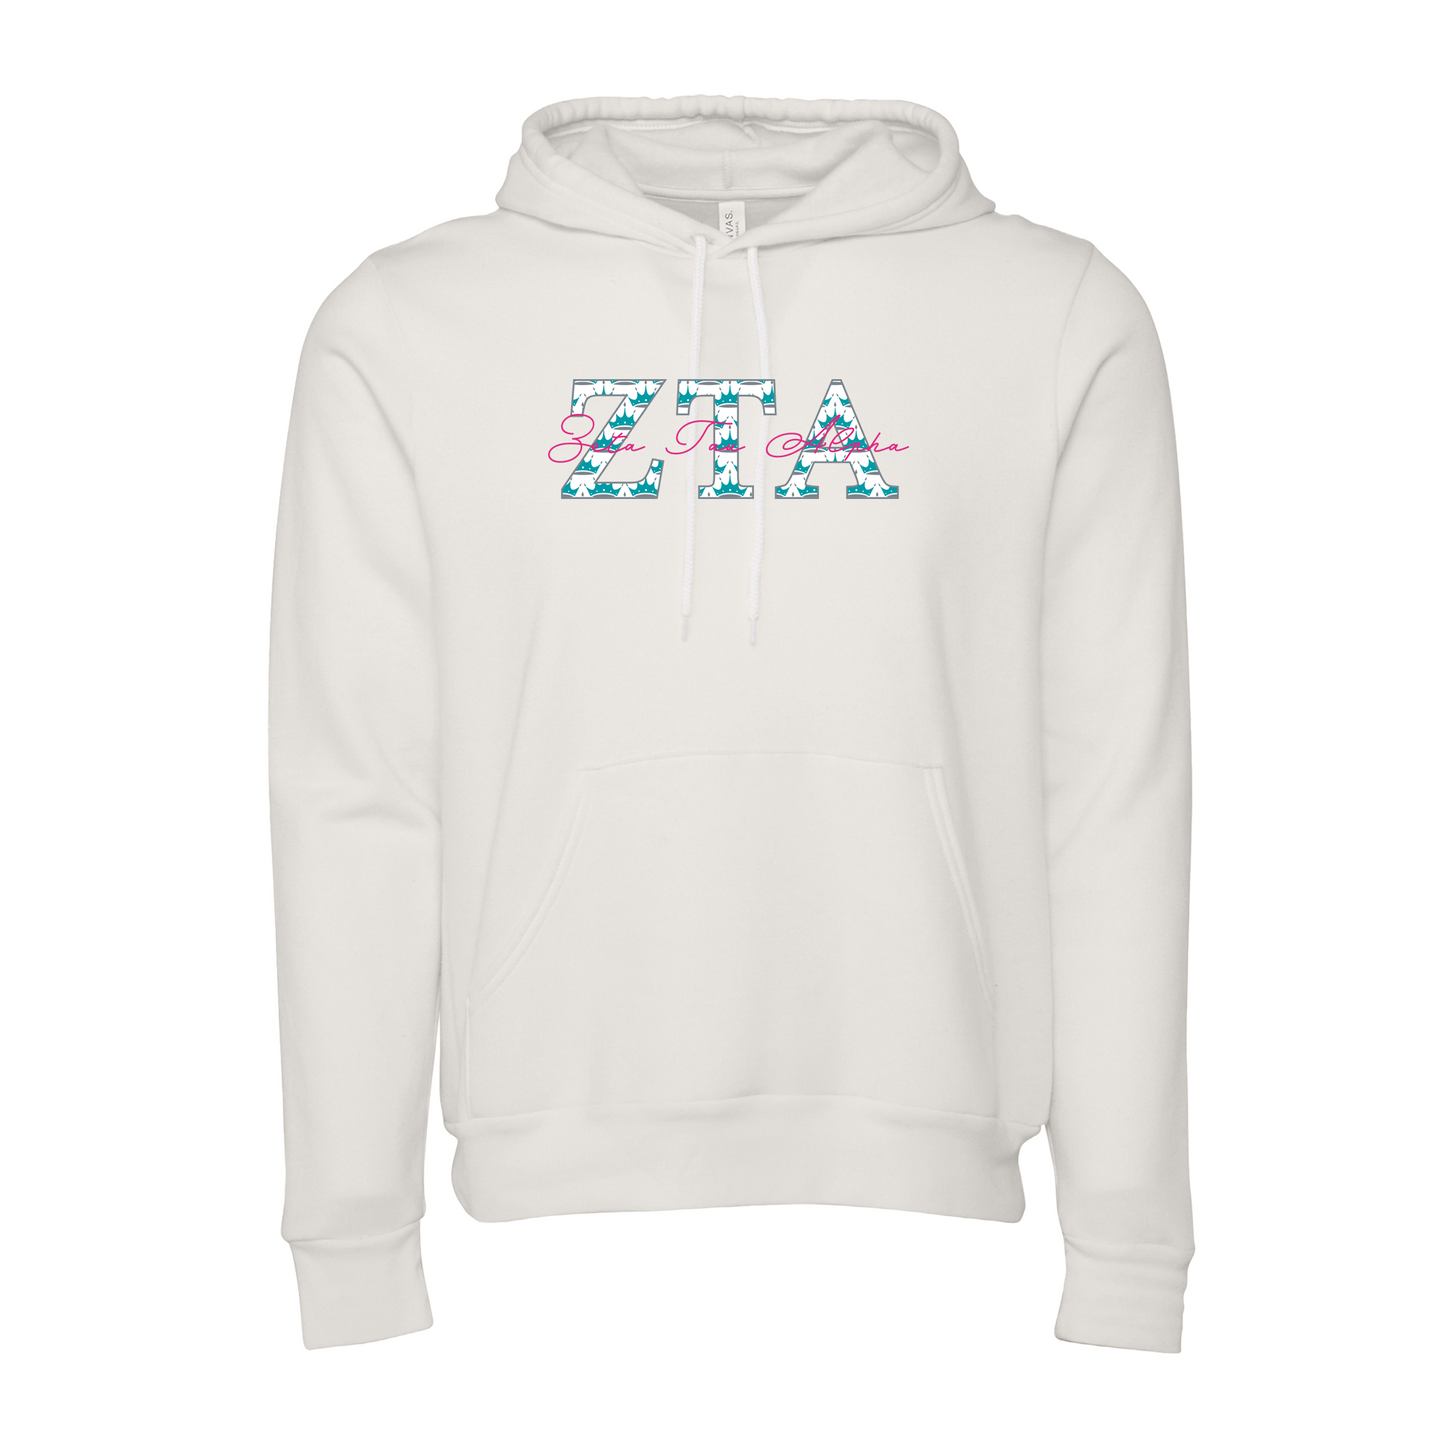 Zeta Tau Alpha Applique Letters Hooded Sweatshirt